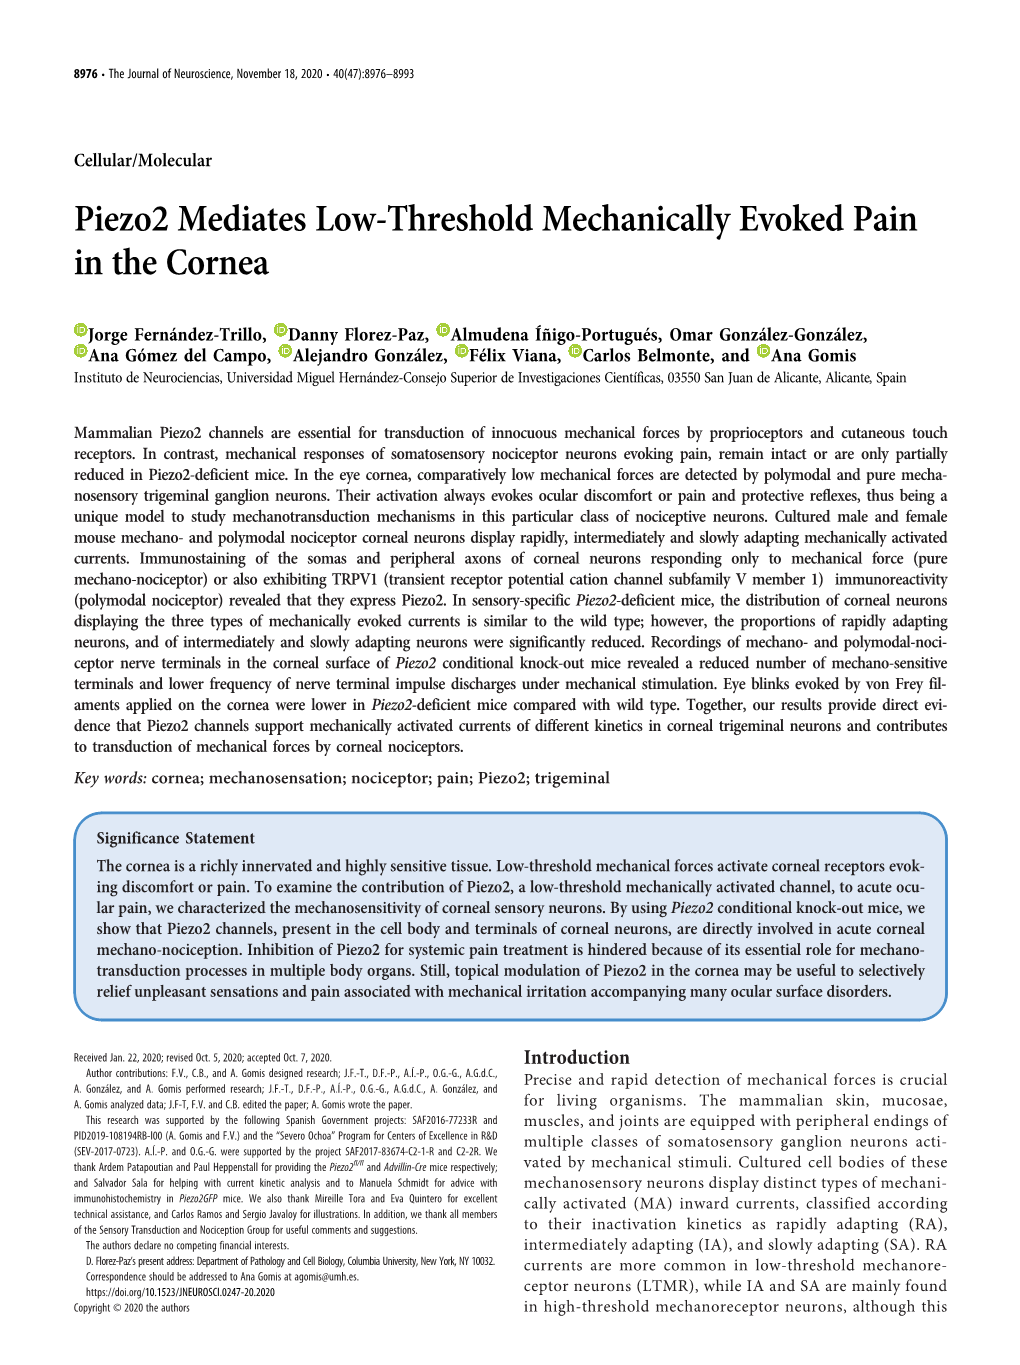 Piezo2 Mediates Low-Threshold Mechanically Evoked Pain in the Cornea